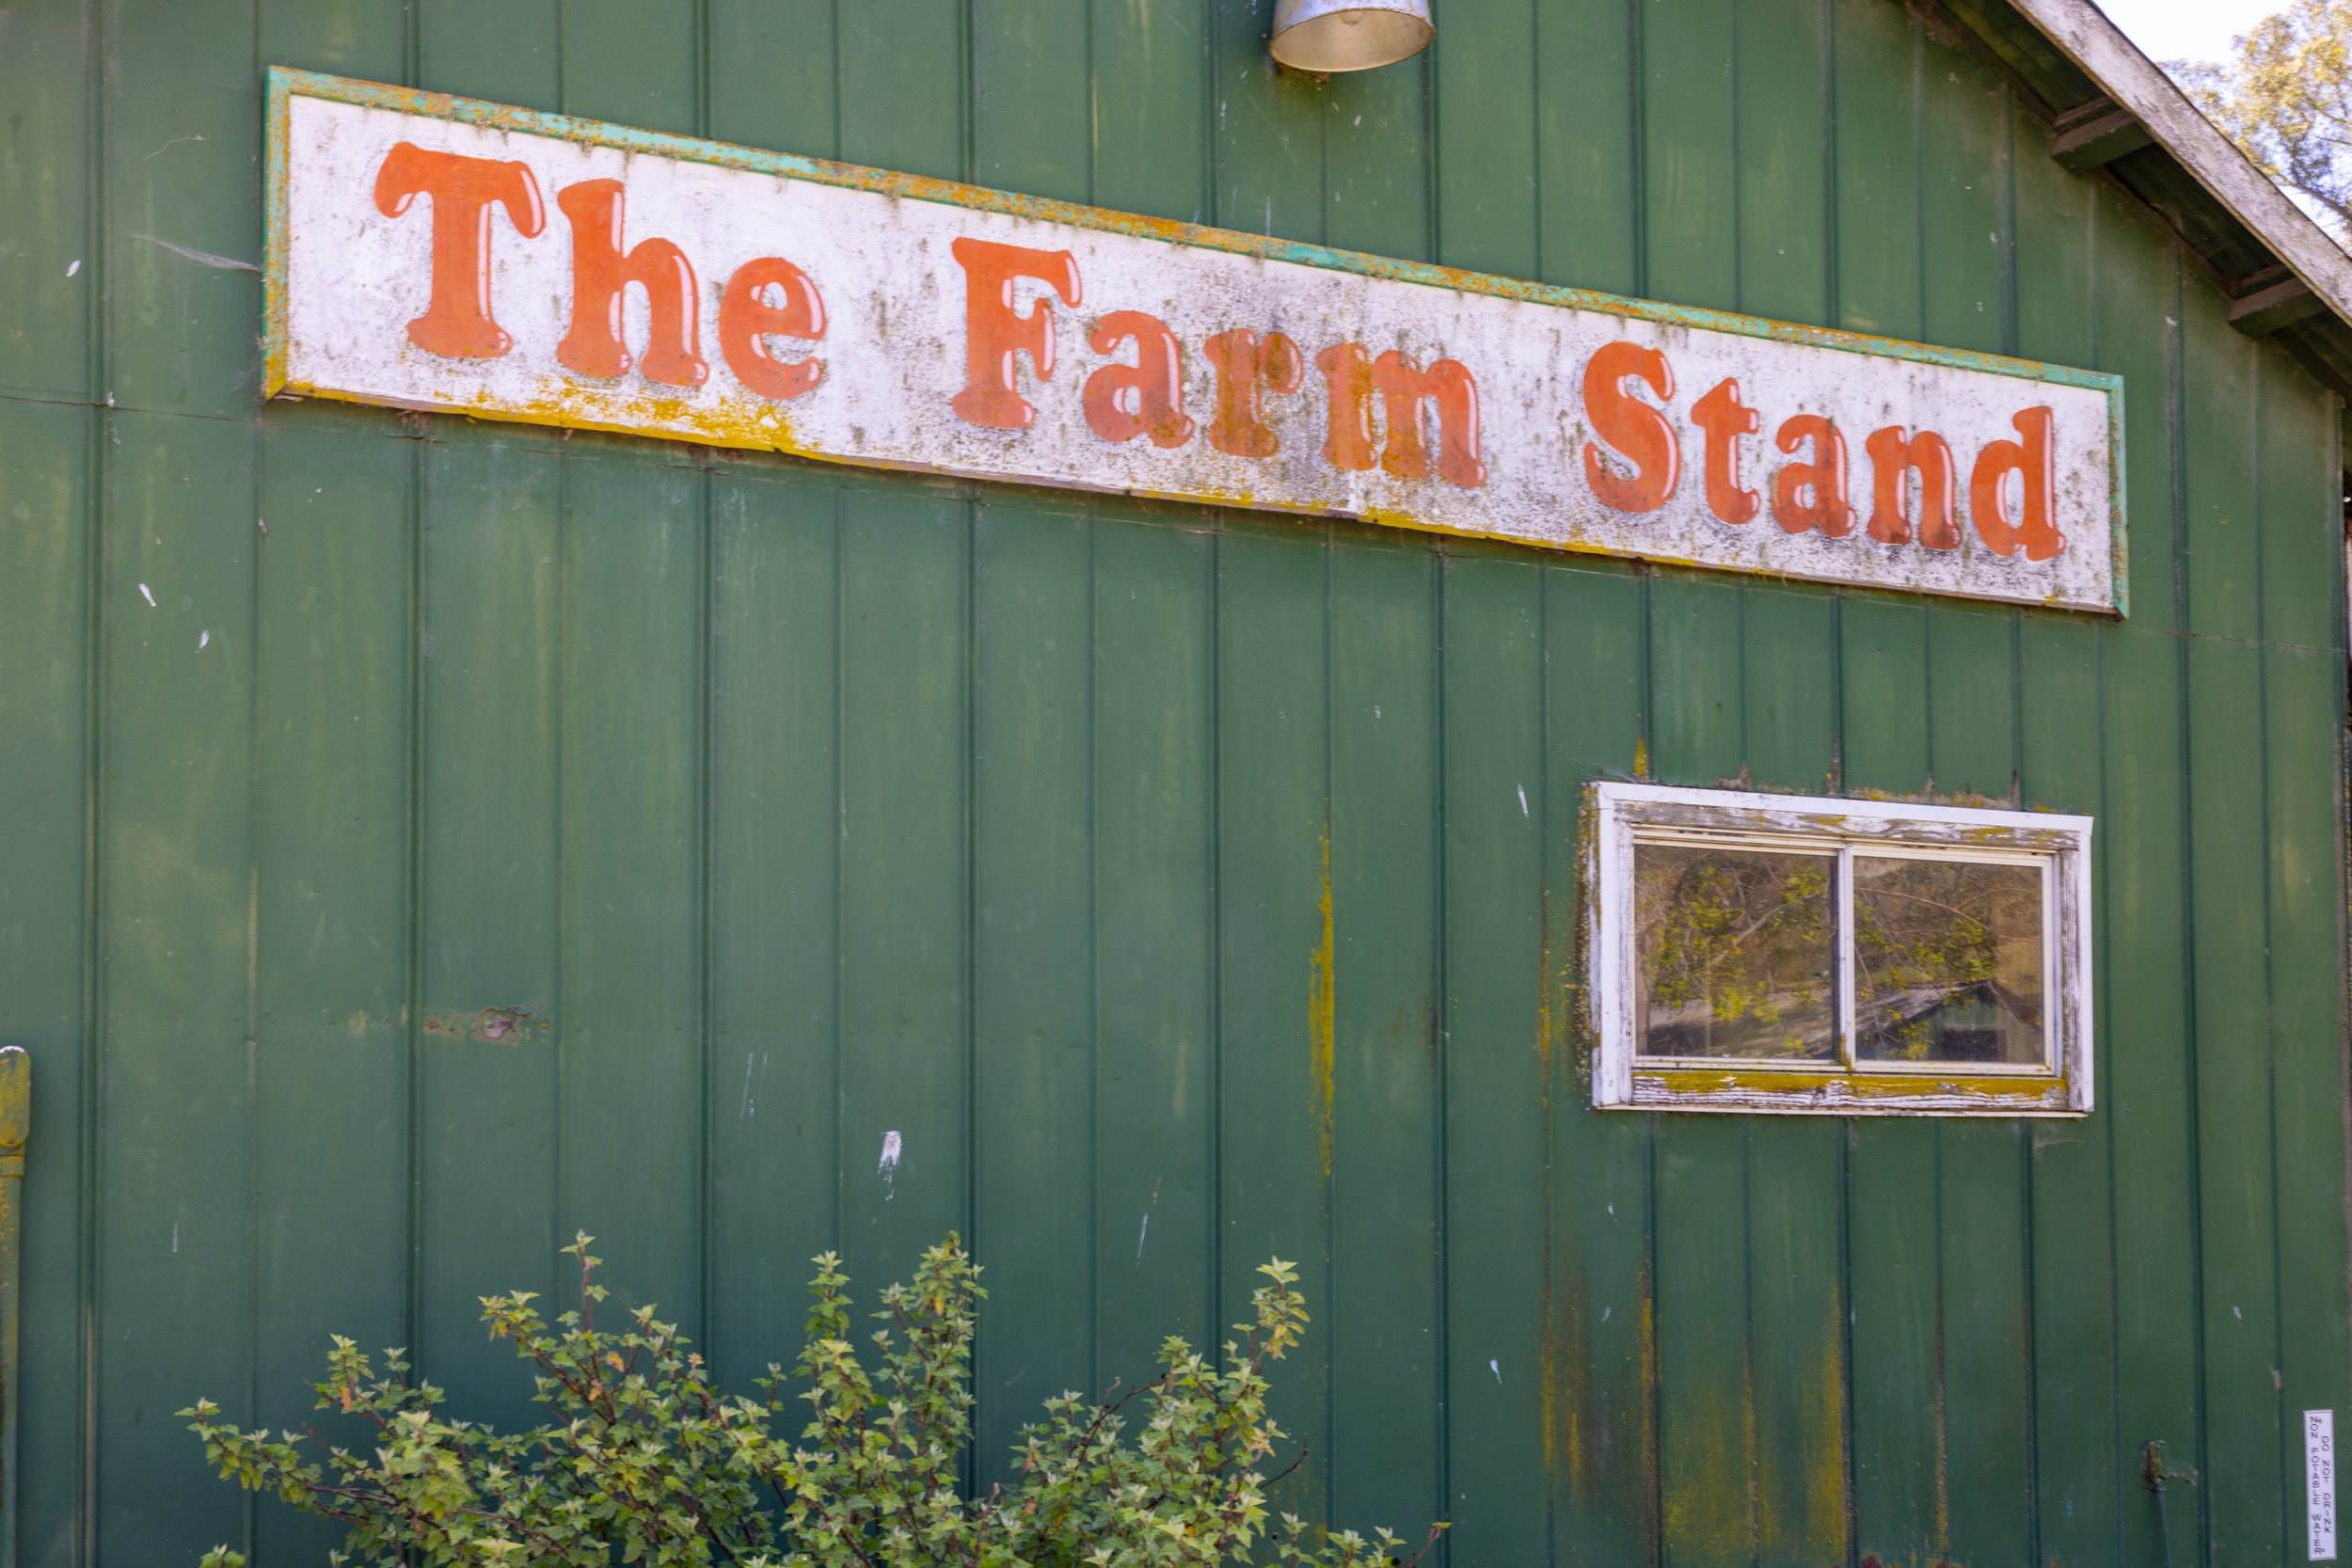 Toley Farm Stand.jpg